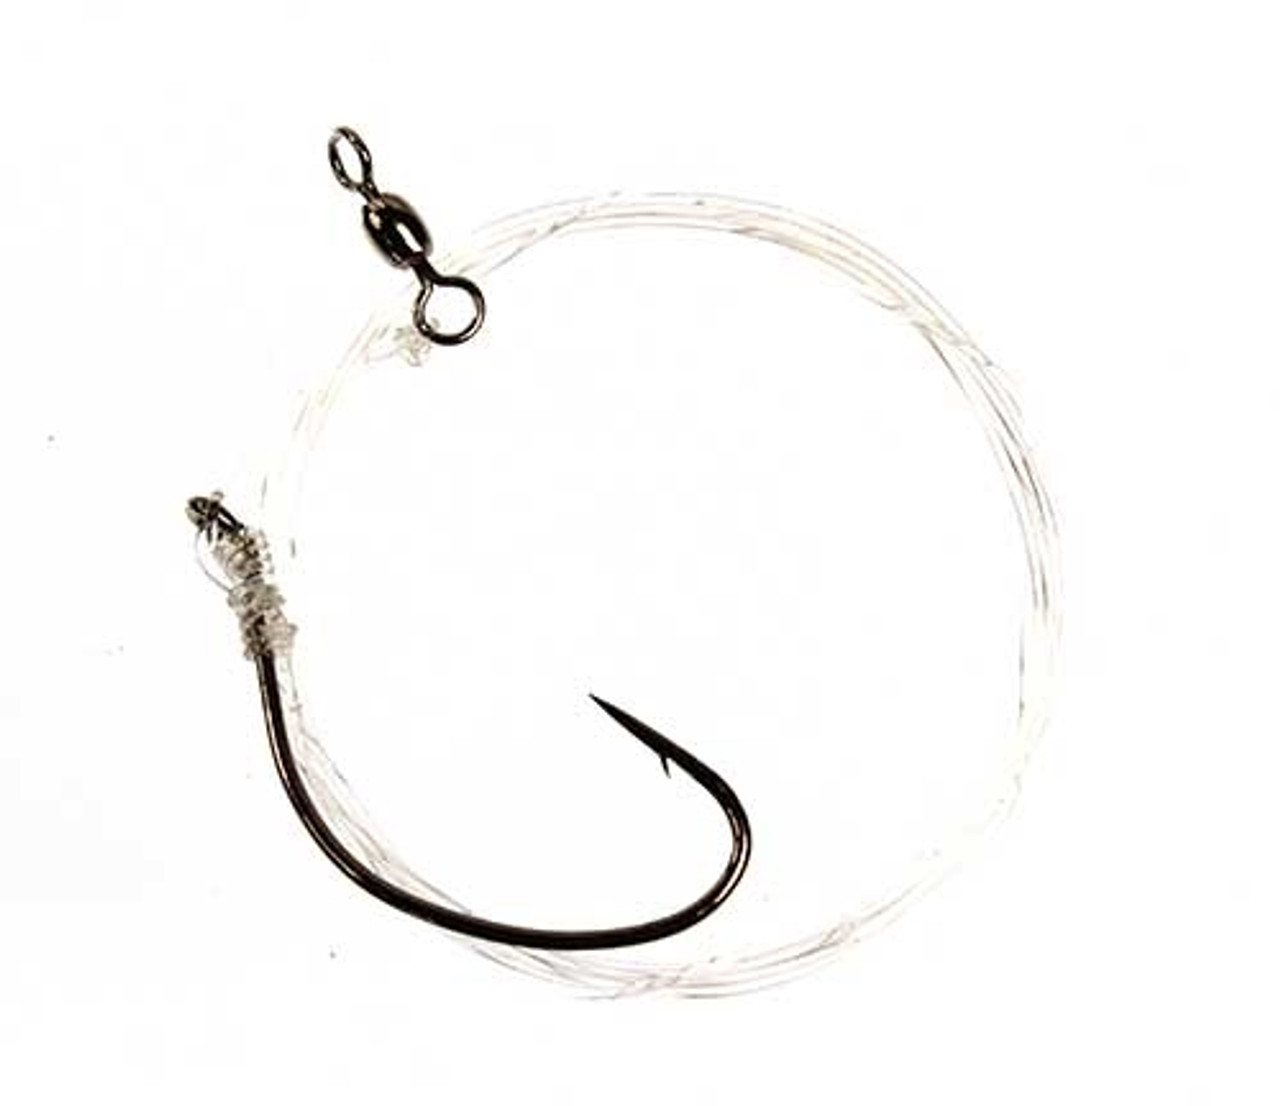  Fishing Tip Up Leader Steel Rig 15cm/6 Circle Triple Fishing  Hook #1/0 Trolling Jig : Sports & Outdoors